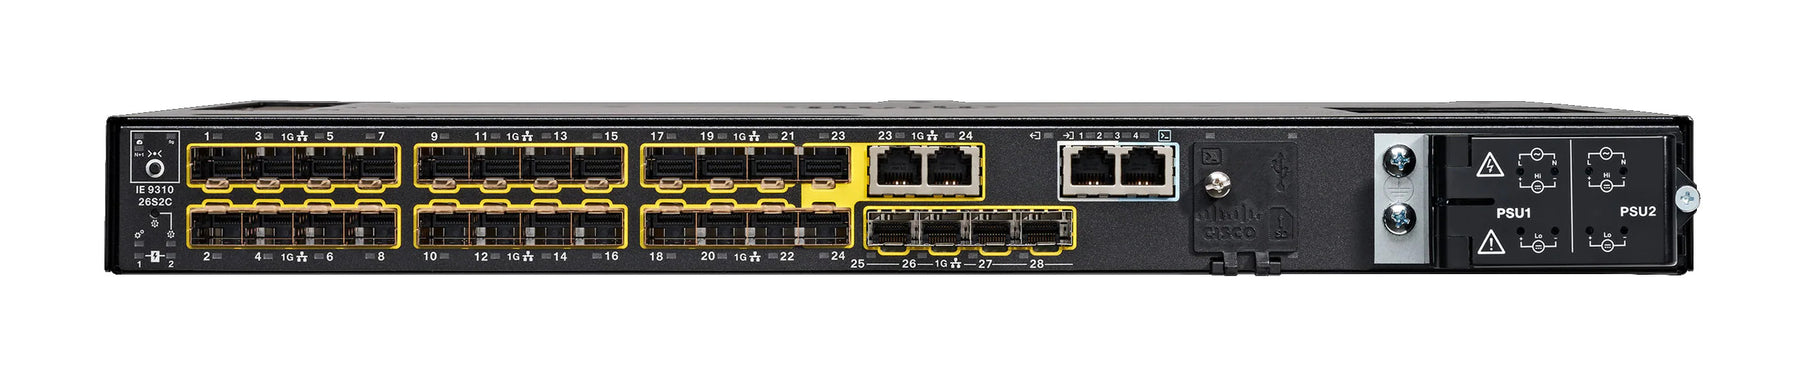 IE-9310-26S2C-E - Cisco Catalyst IE9310 24 Port GE Rugged Switch NE